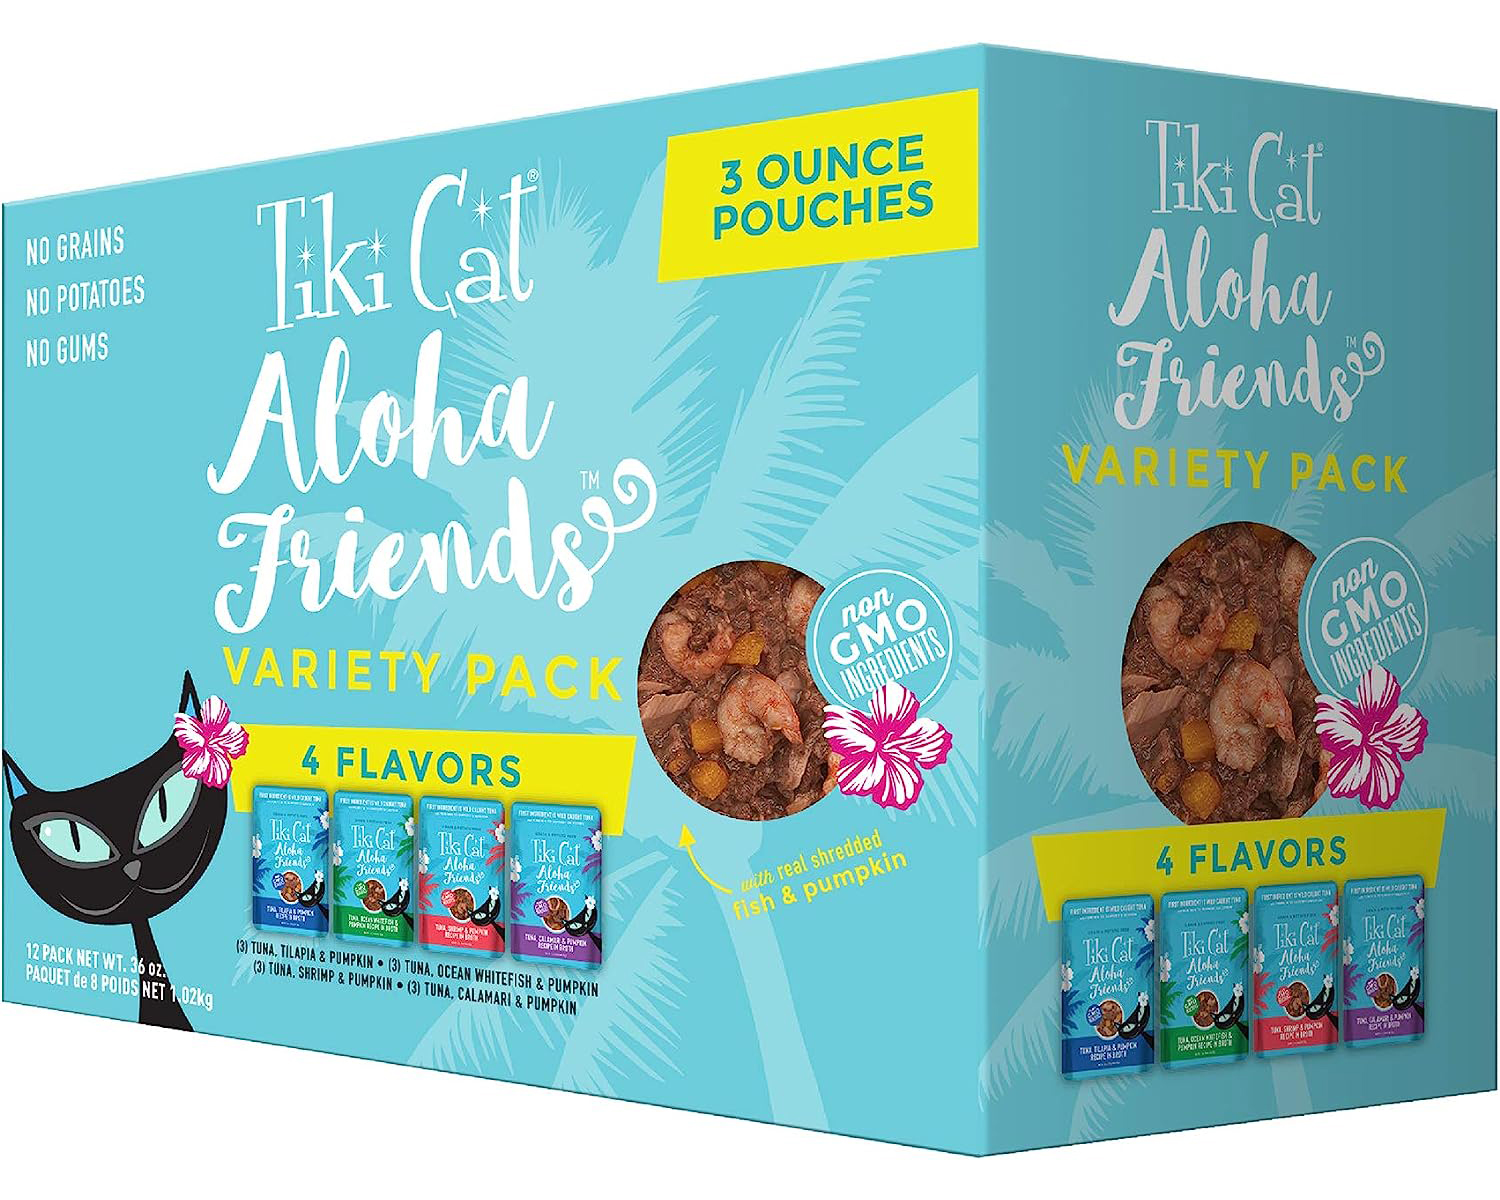 Tiki Cat Aloha Friends Variety Pack